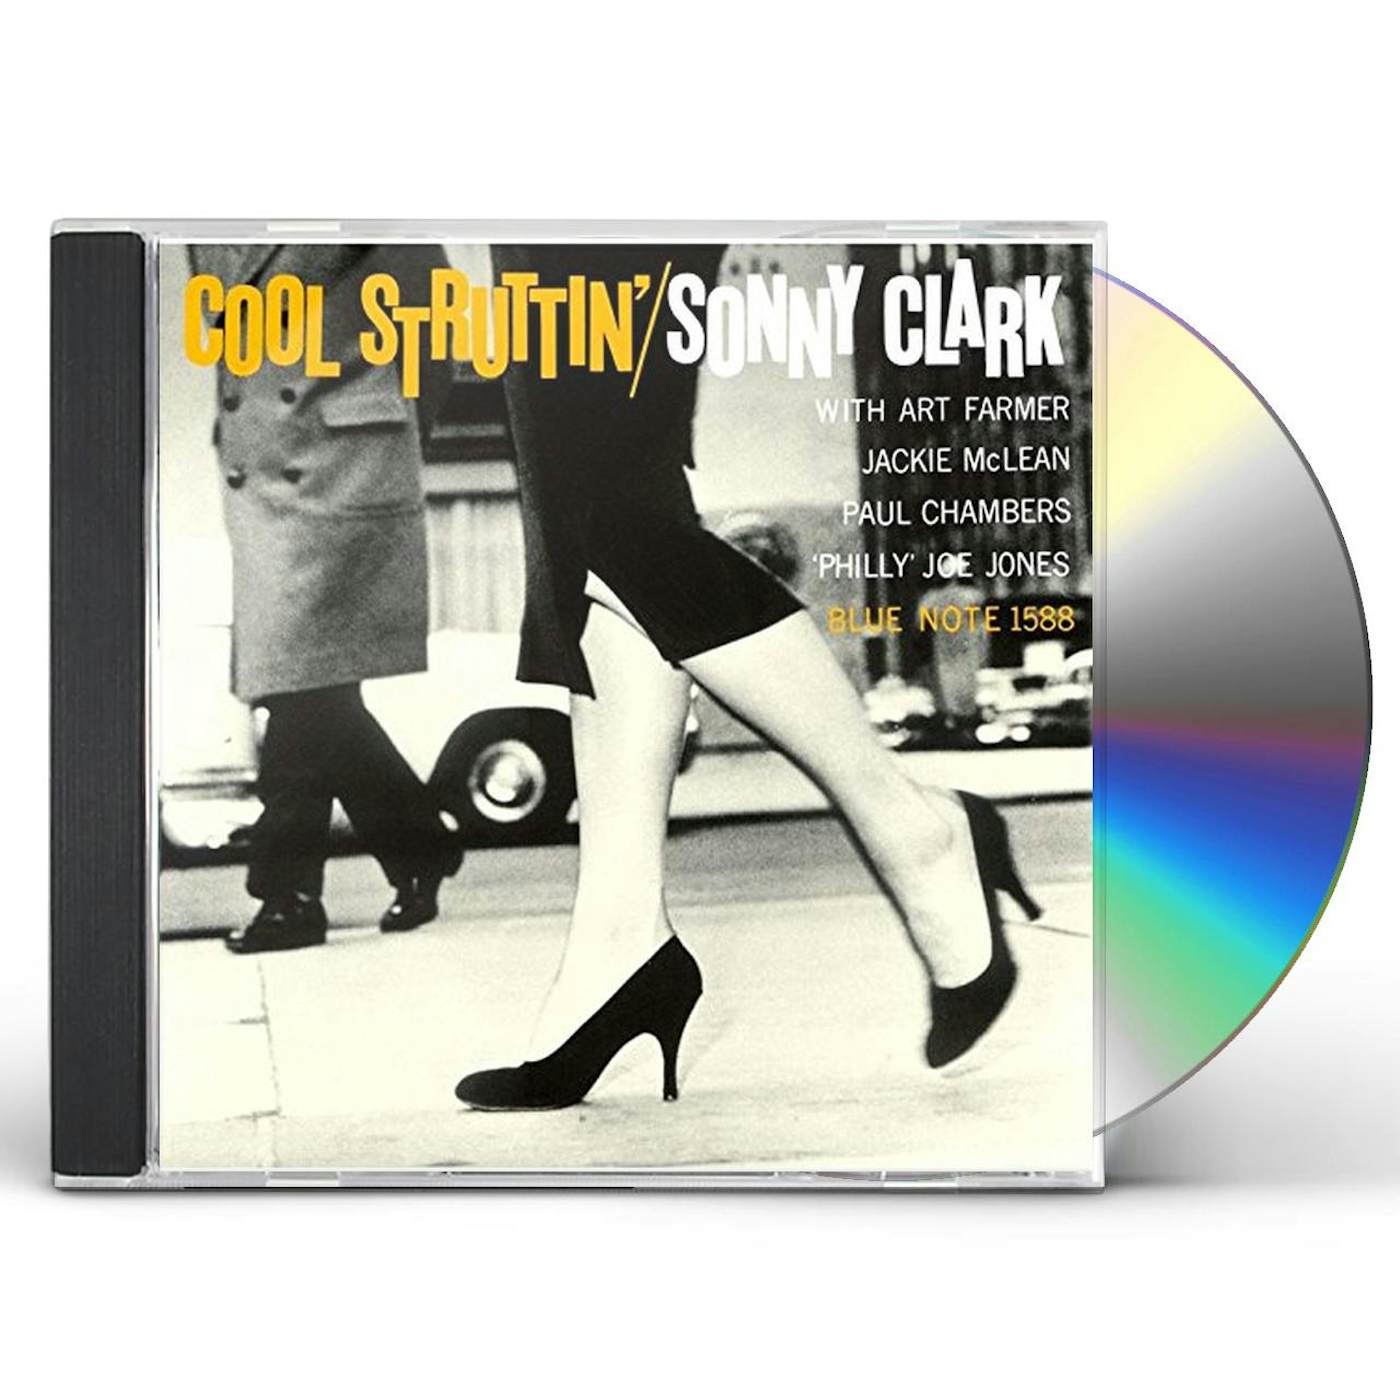 Sonny Clark COOL STRUTTIN: LIMITED CD